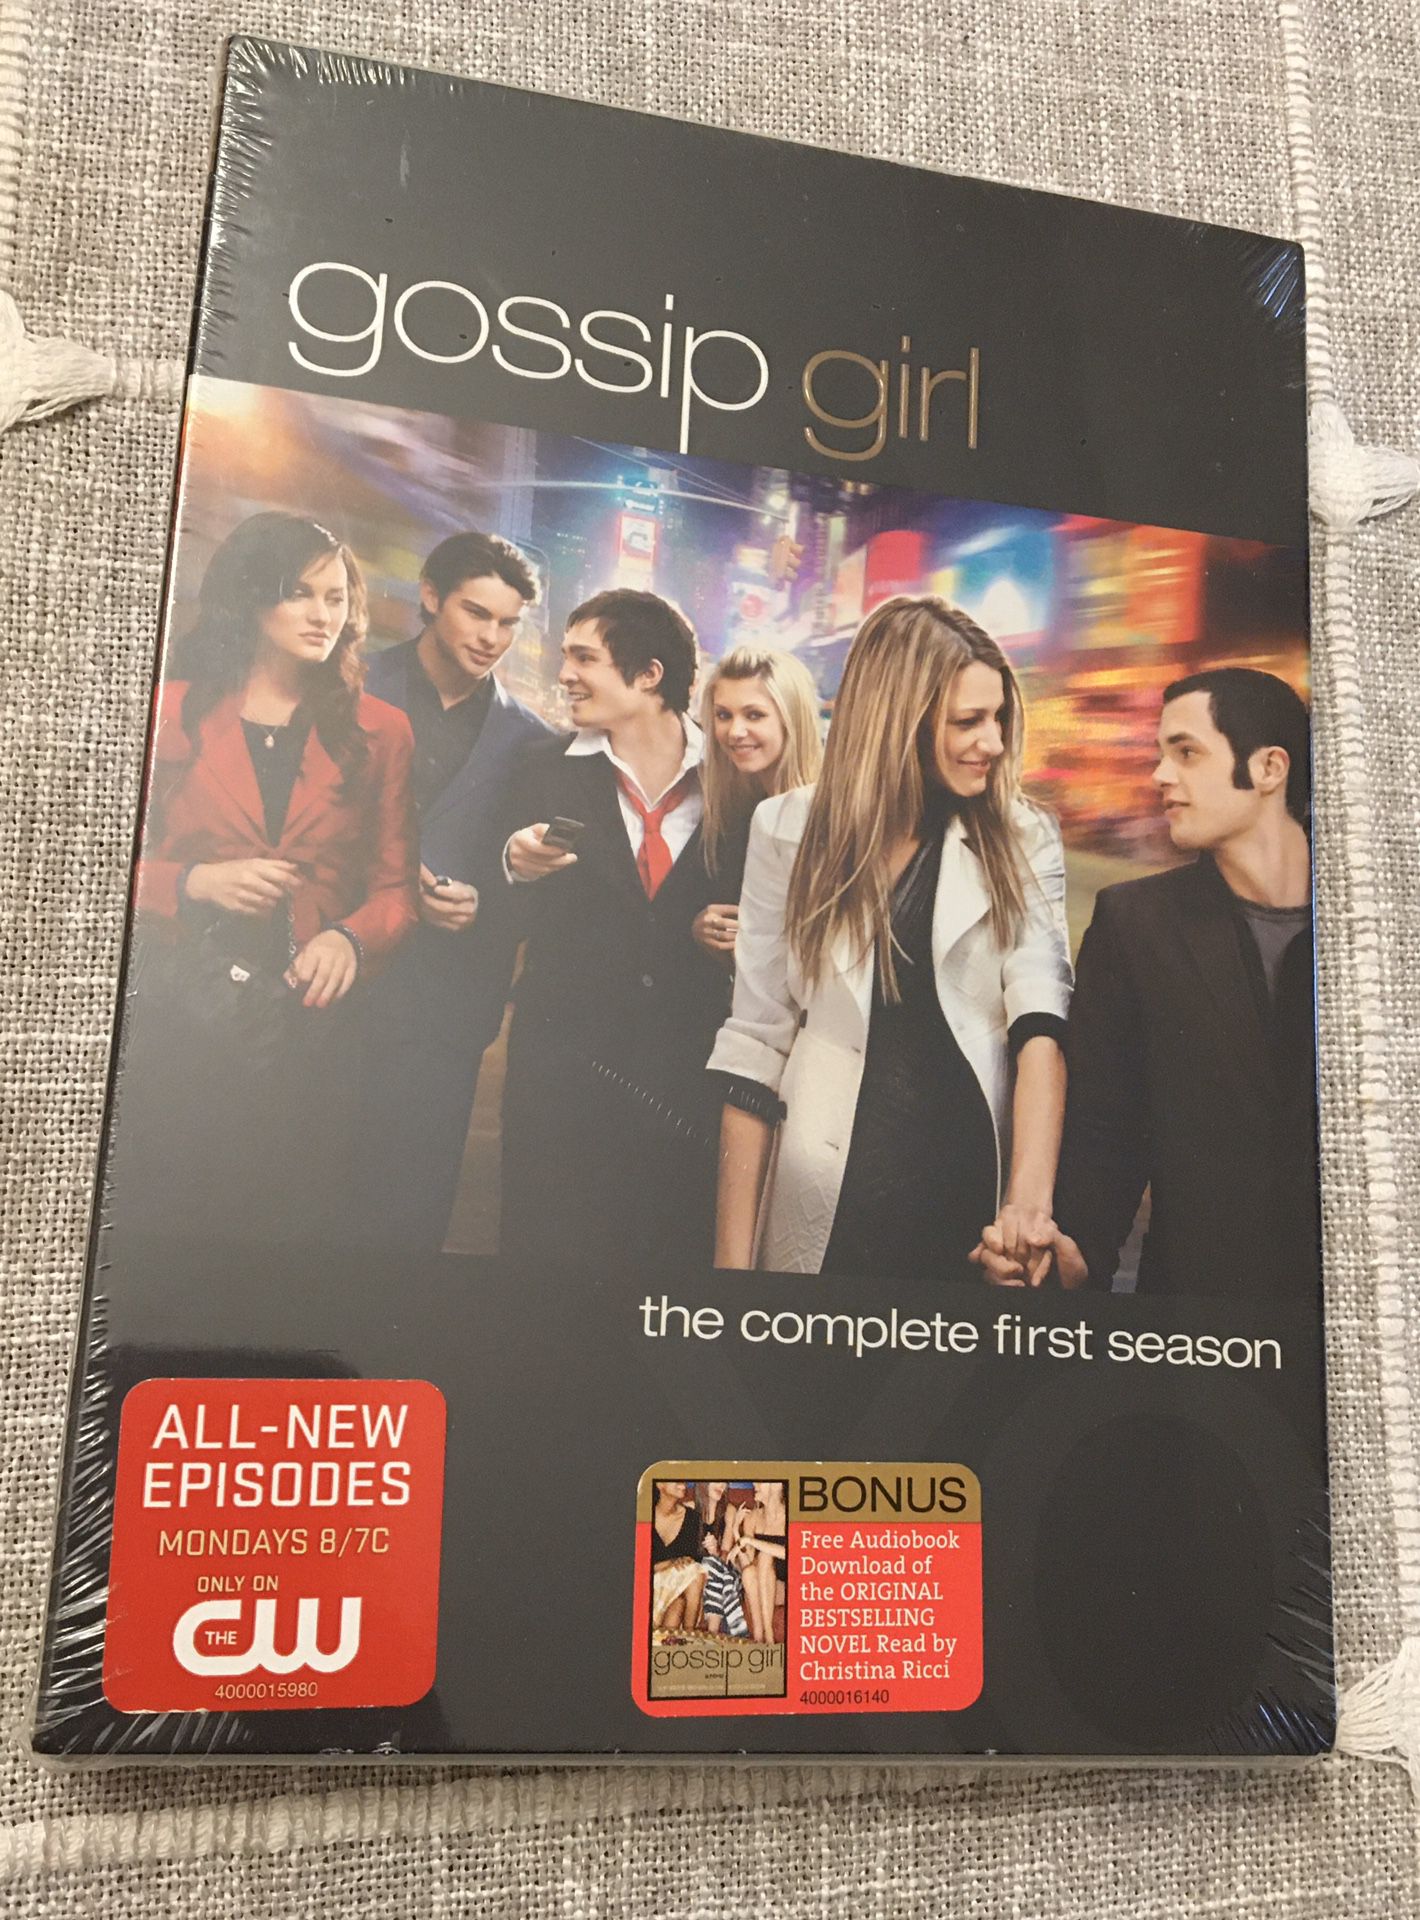 NEW! Gossip Girls Complete First Season (dvd)